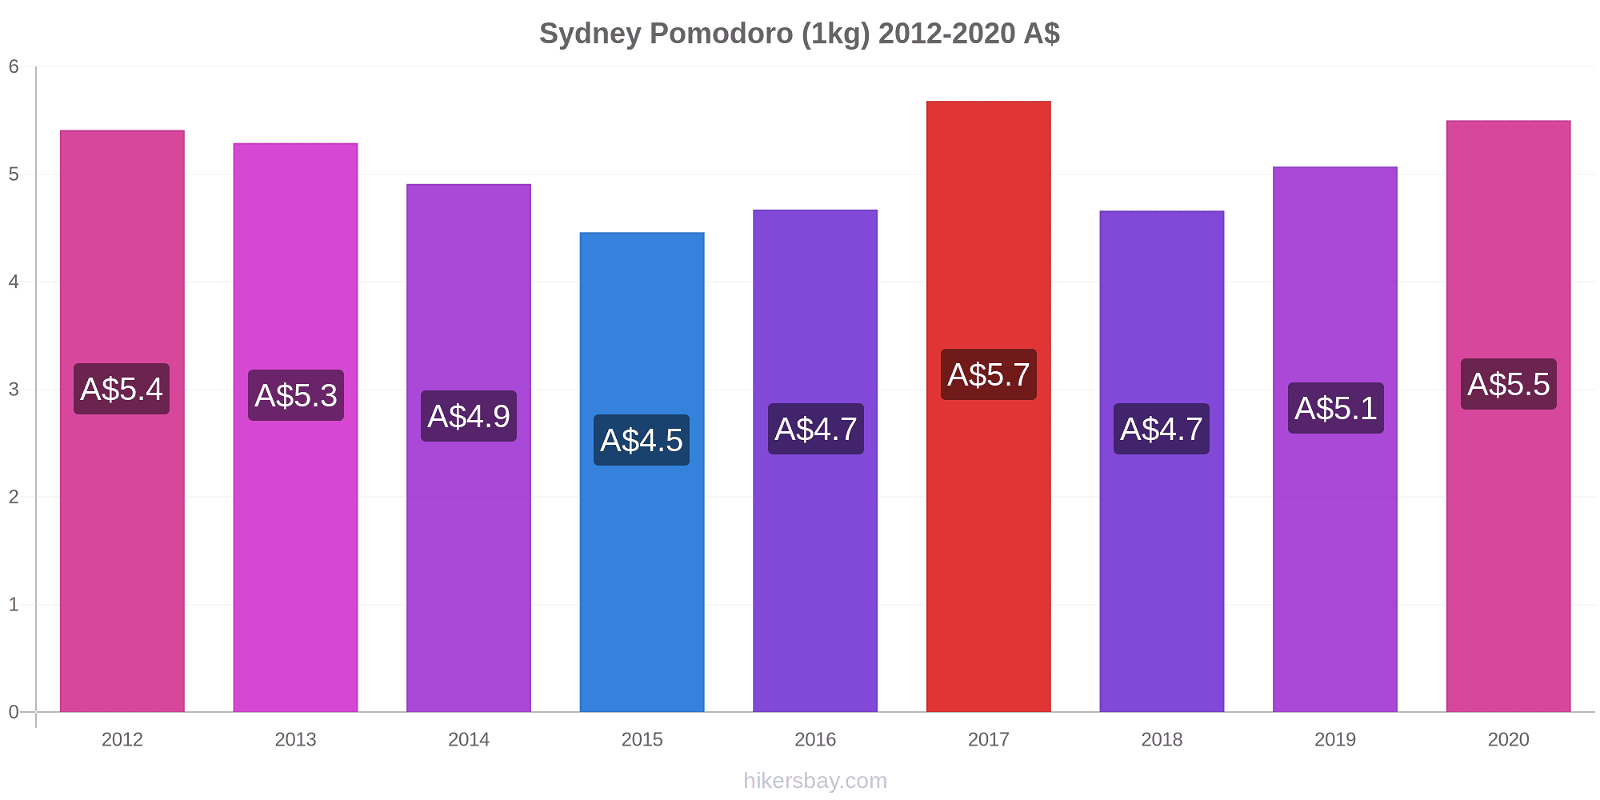 Sydney variazioni di prezzo Pomodoro (1kg) hikersbay.com